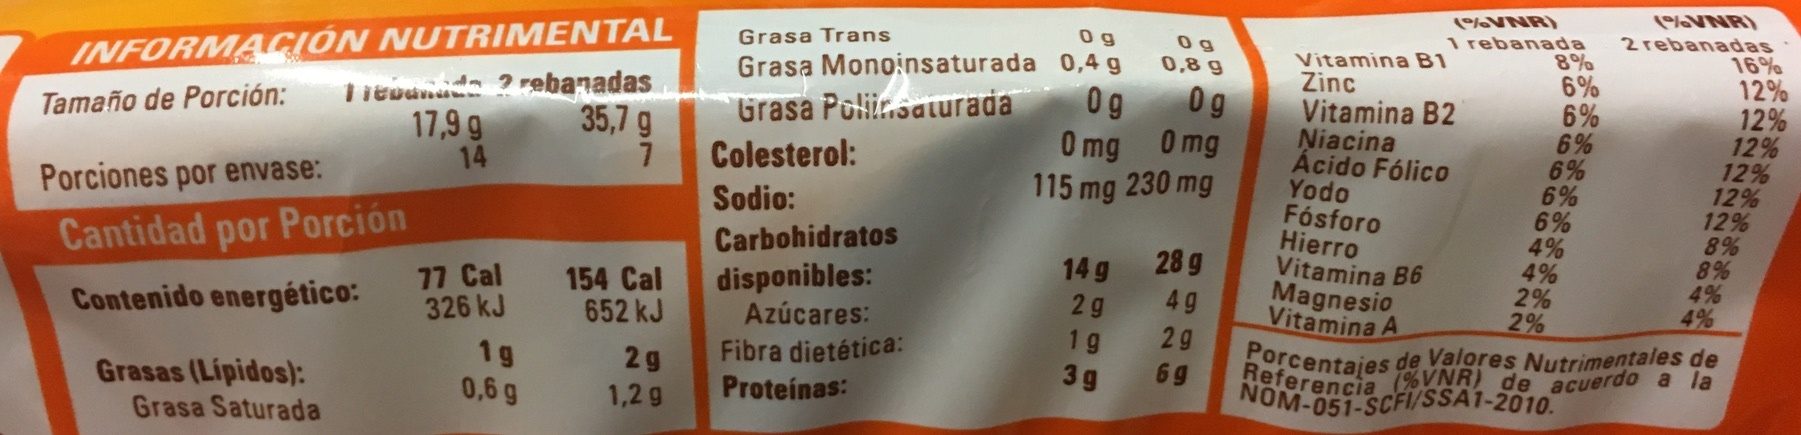 Pan tostado integral - Tableau nutritionnel - es